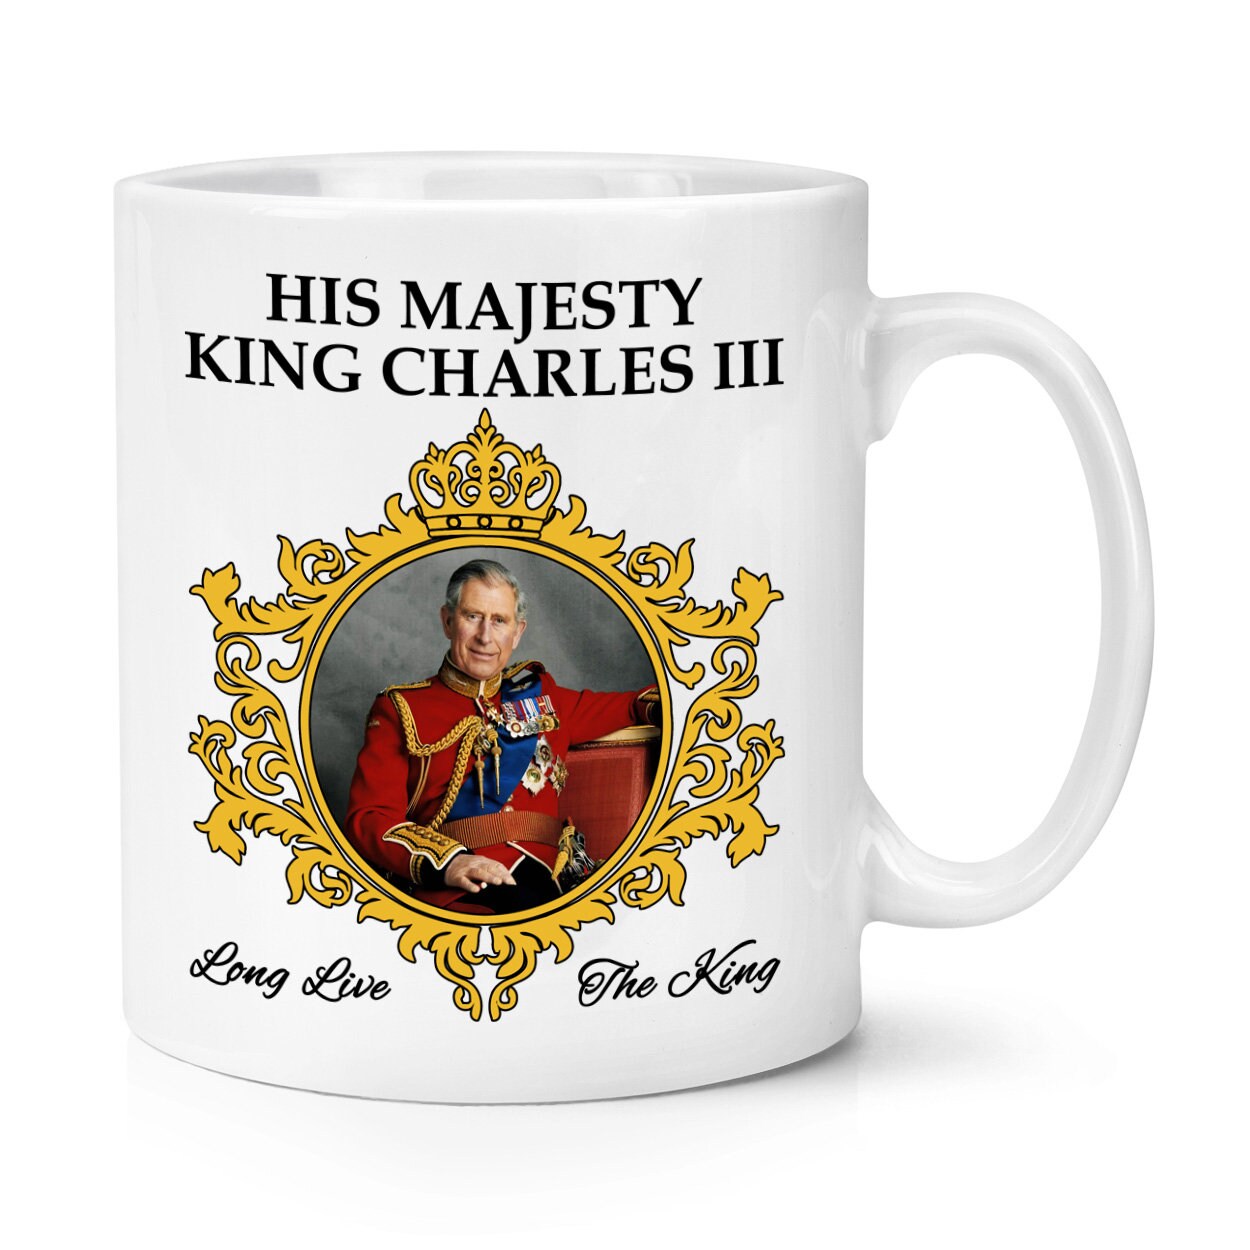 King Charles III 2022 Mug Cup Commemorative Gift His Majesty